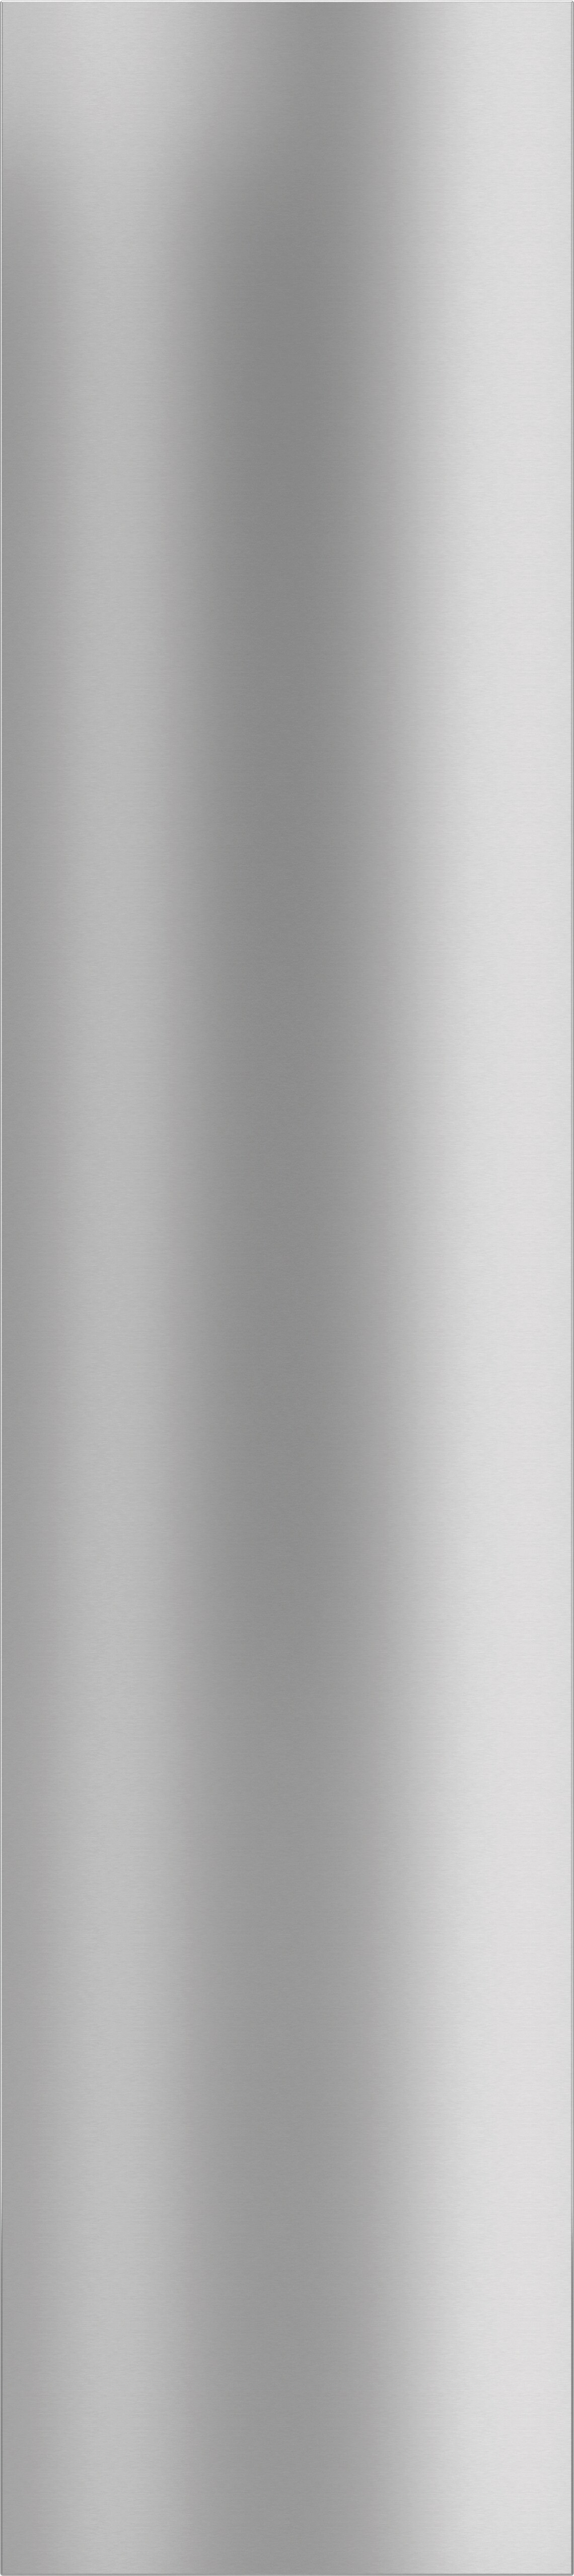 Refrigeration - KFP 1805 ed/cs - 1